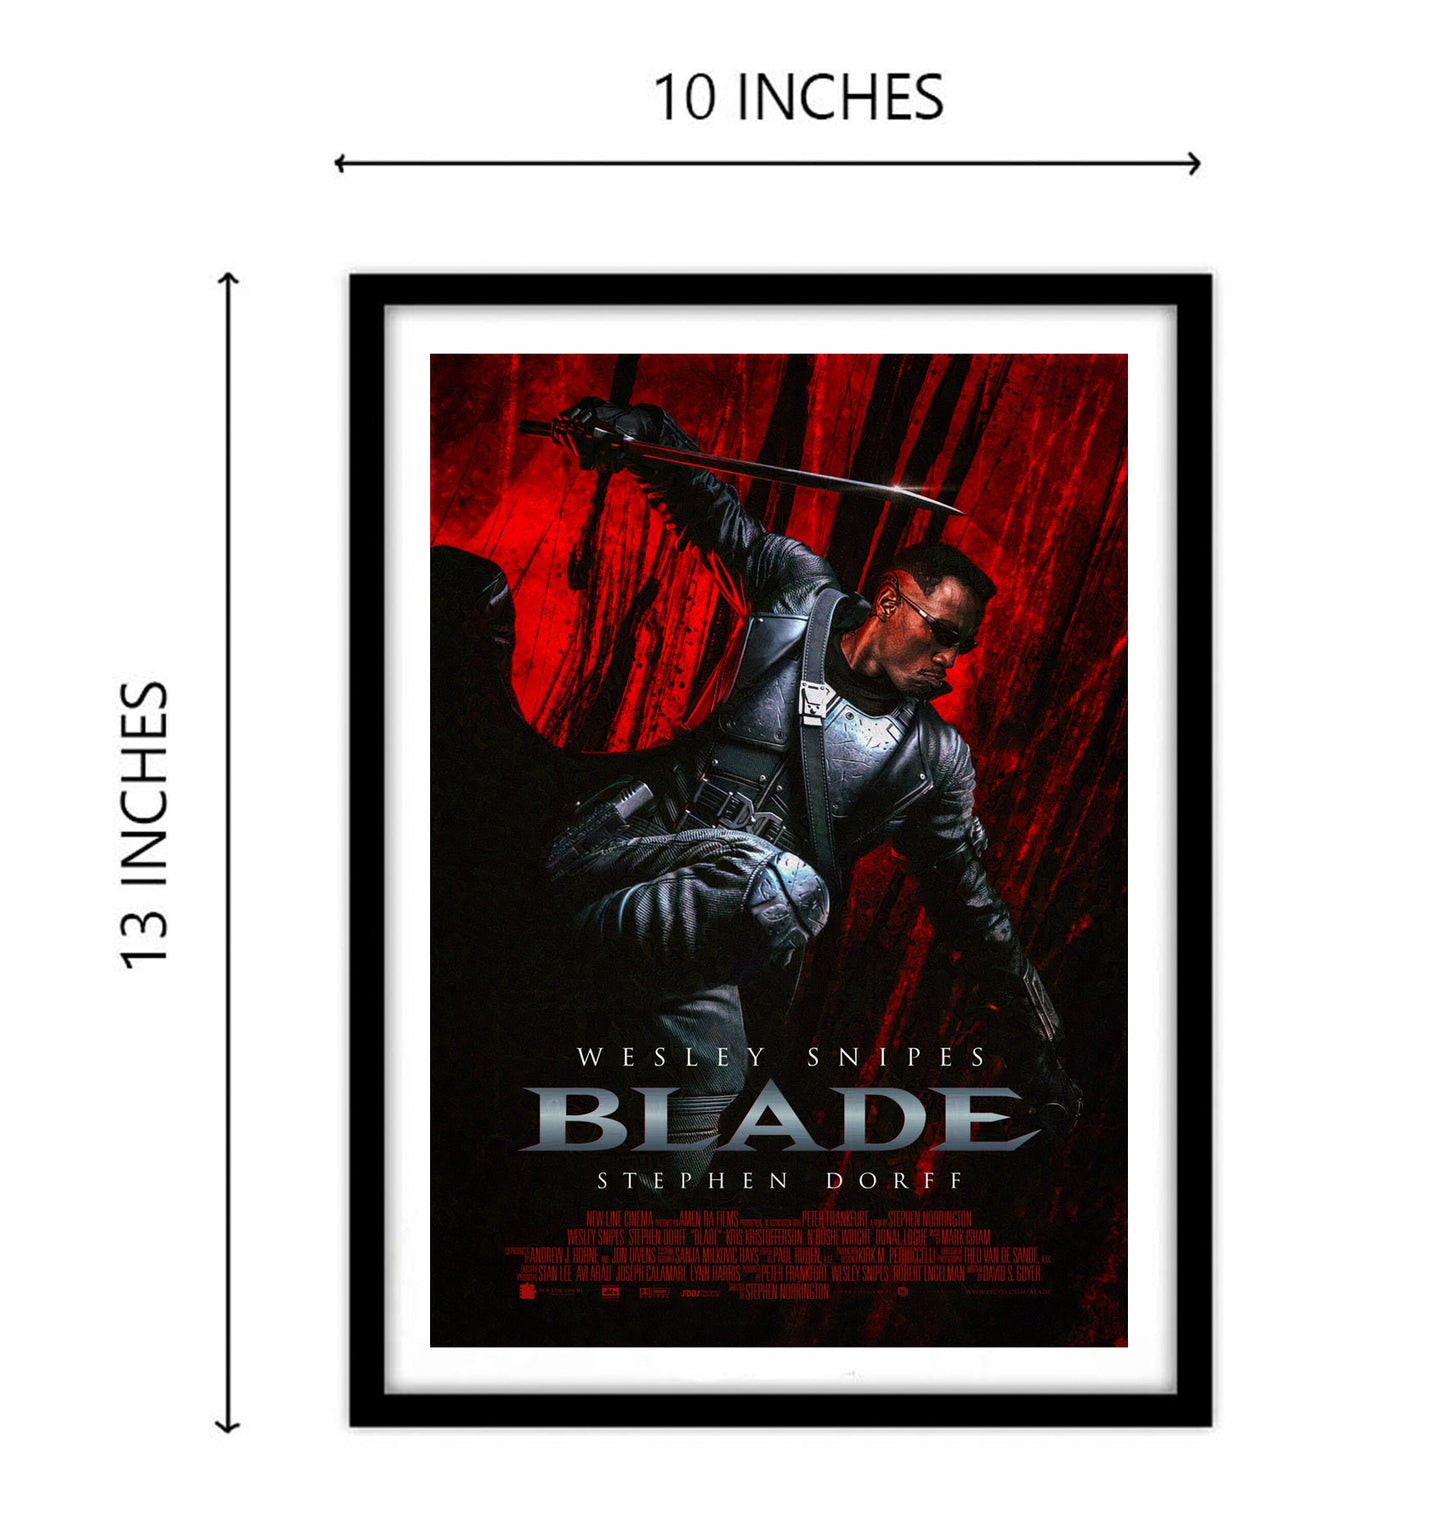 Blade Film Artwork